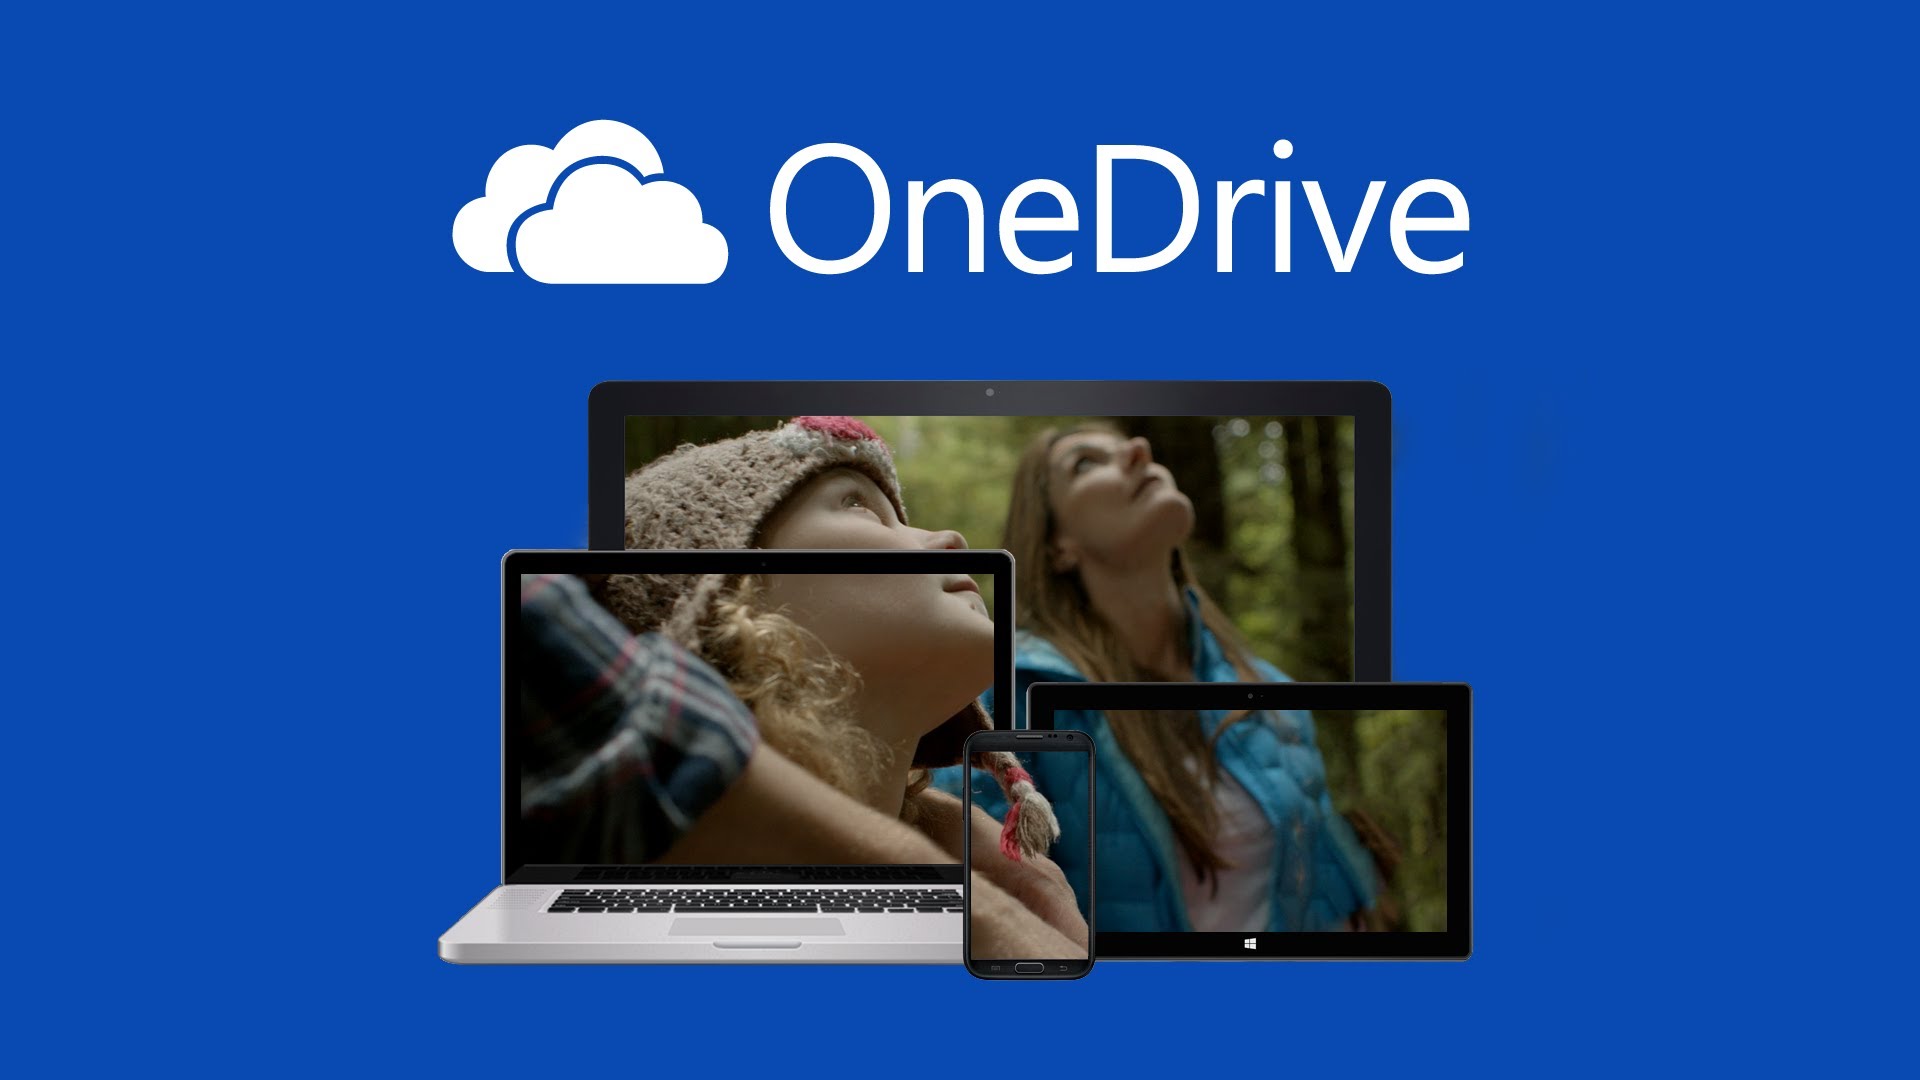 onedrive on a mac can you send files via